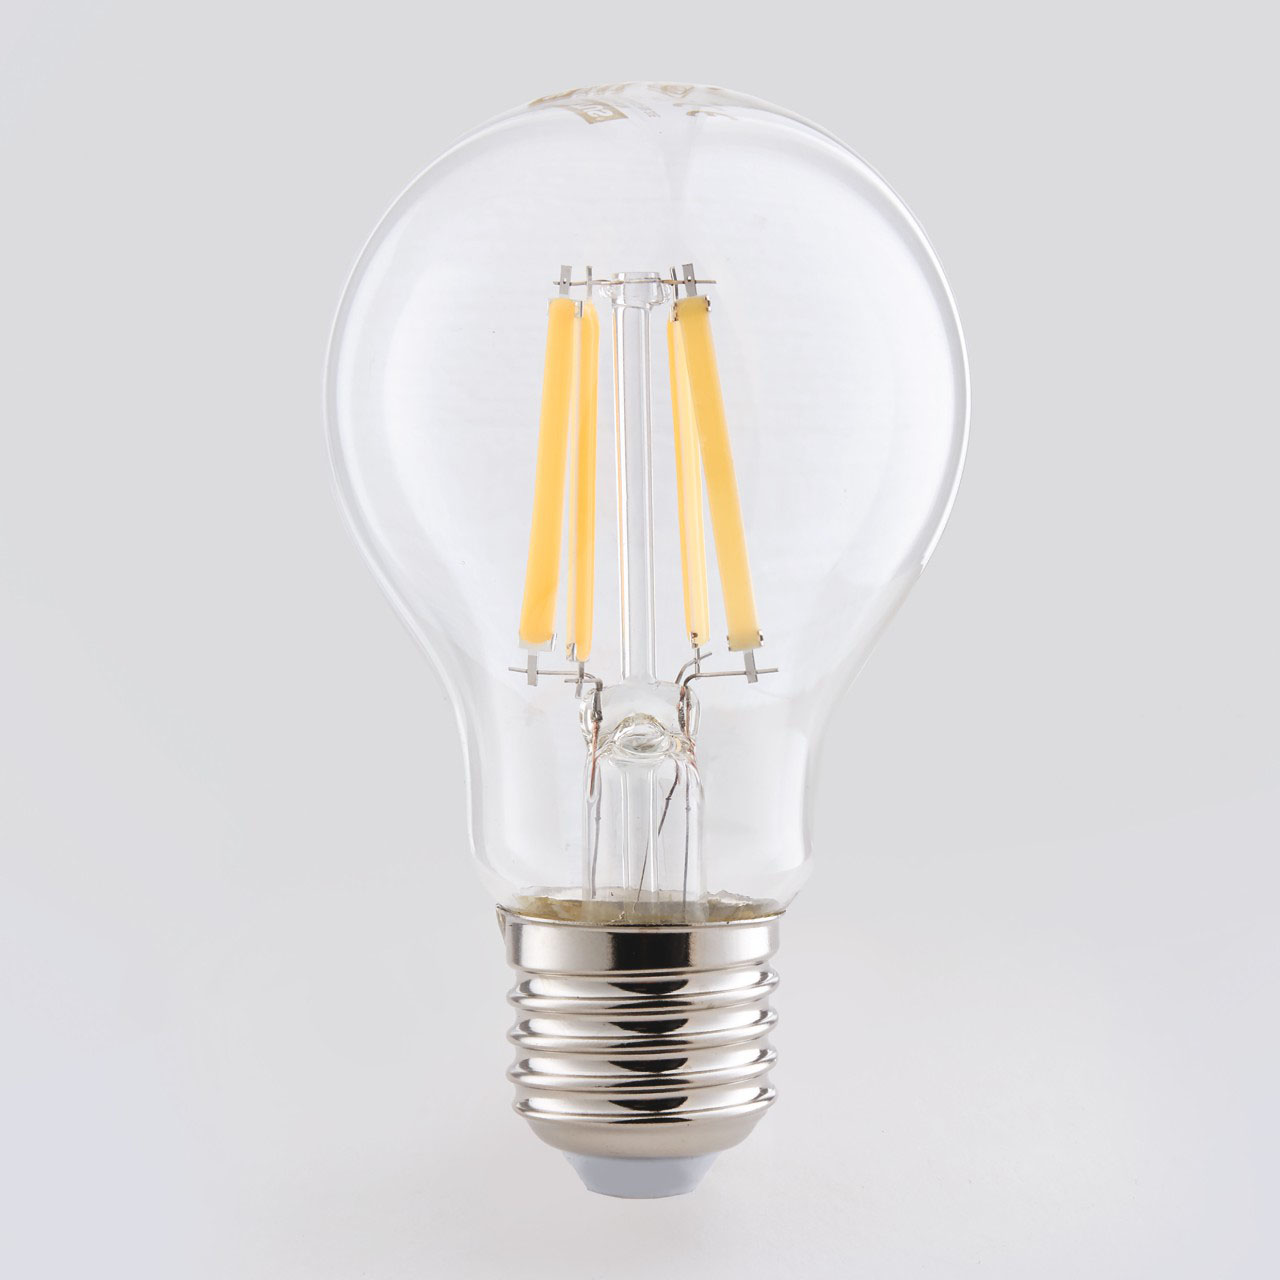 LED Filament Retro-style Light Bulbs